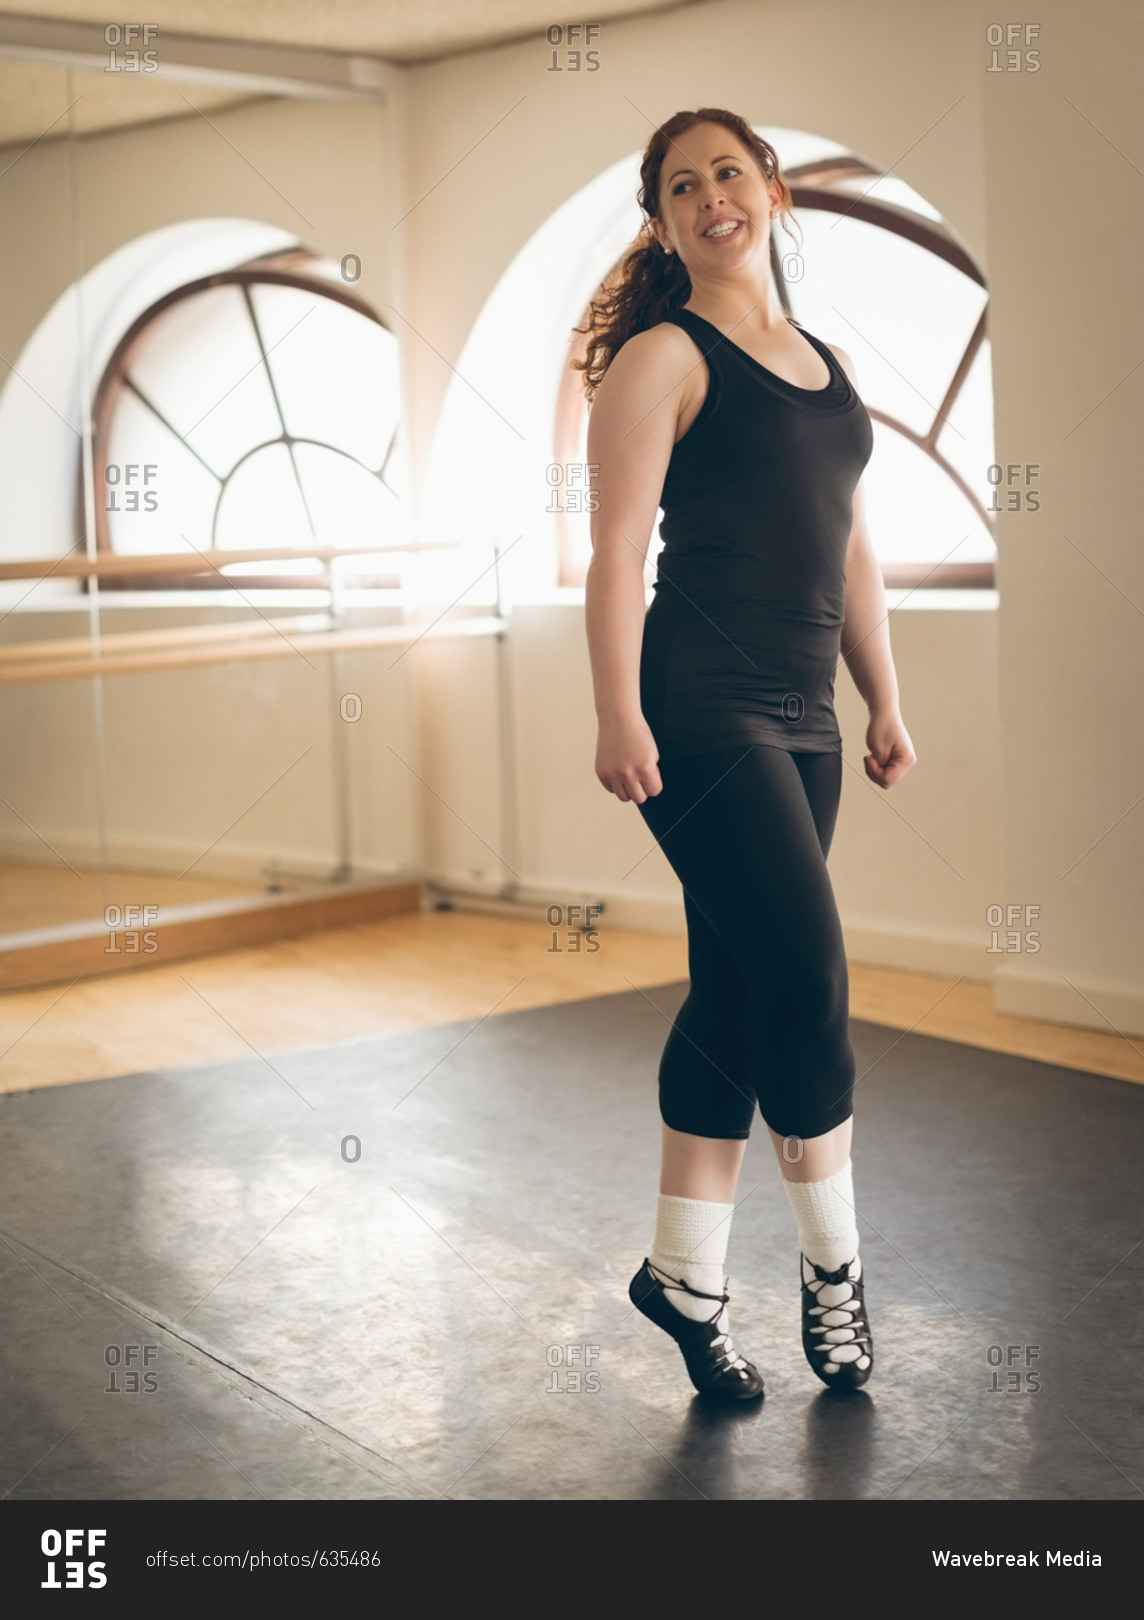 Irish dancer in sportswear performing dance steps in the studio